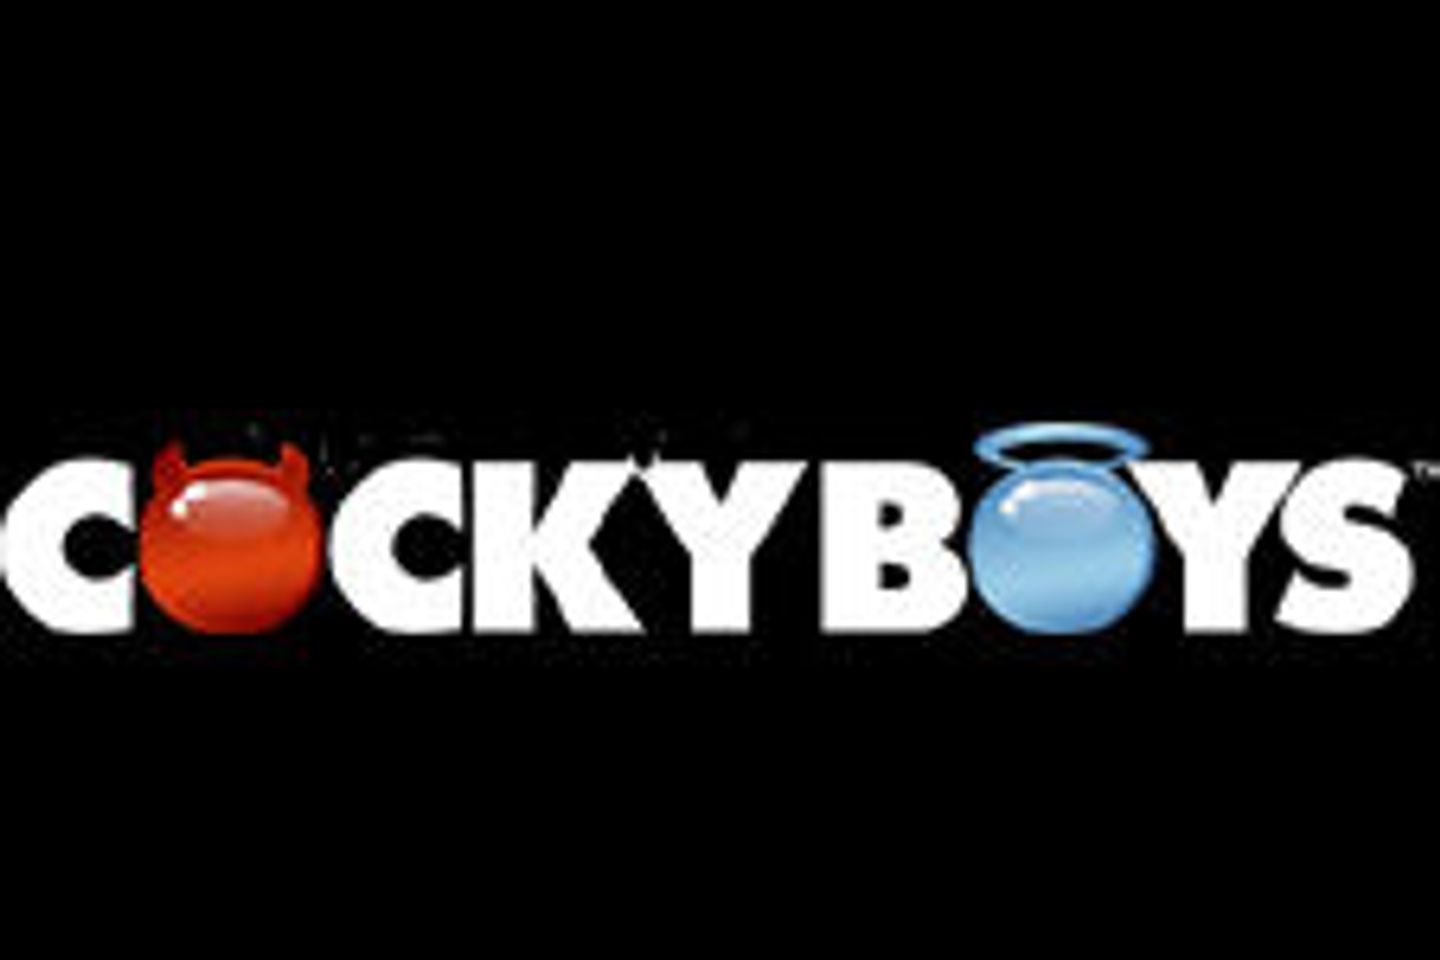 CockyBoys Taps New Marketing-Management Team